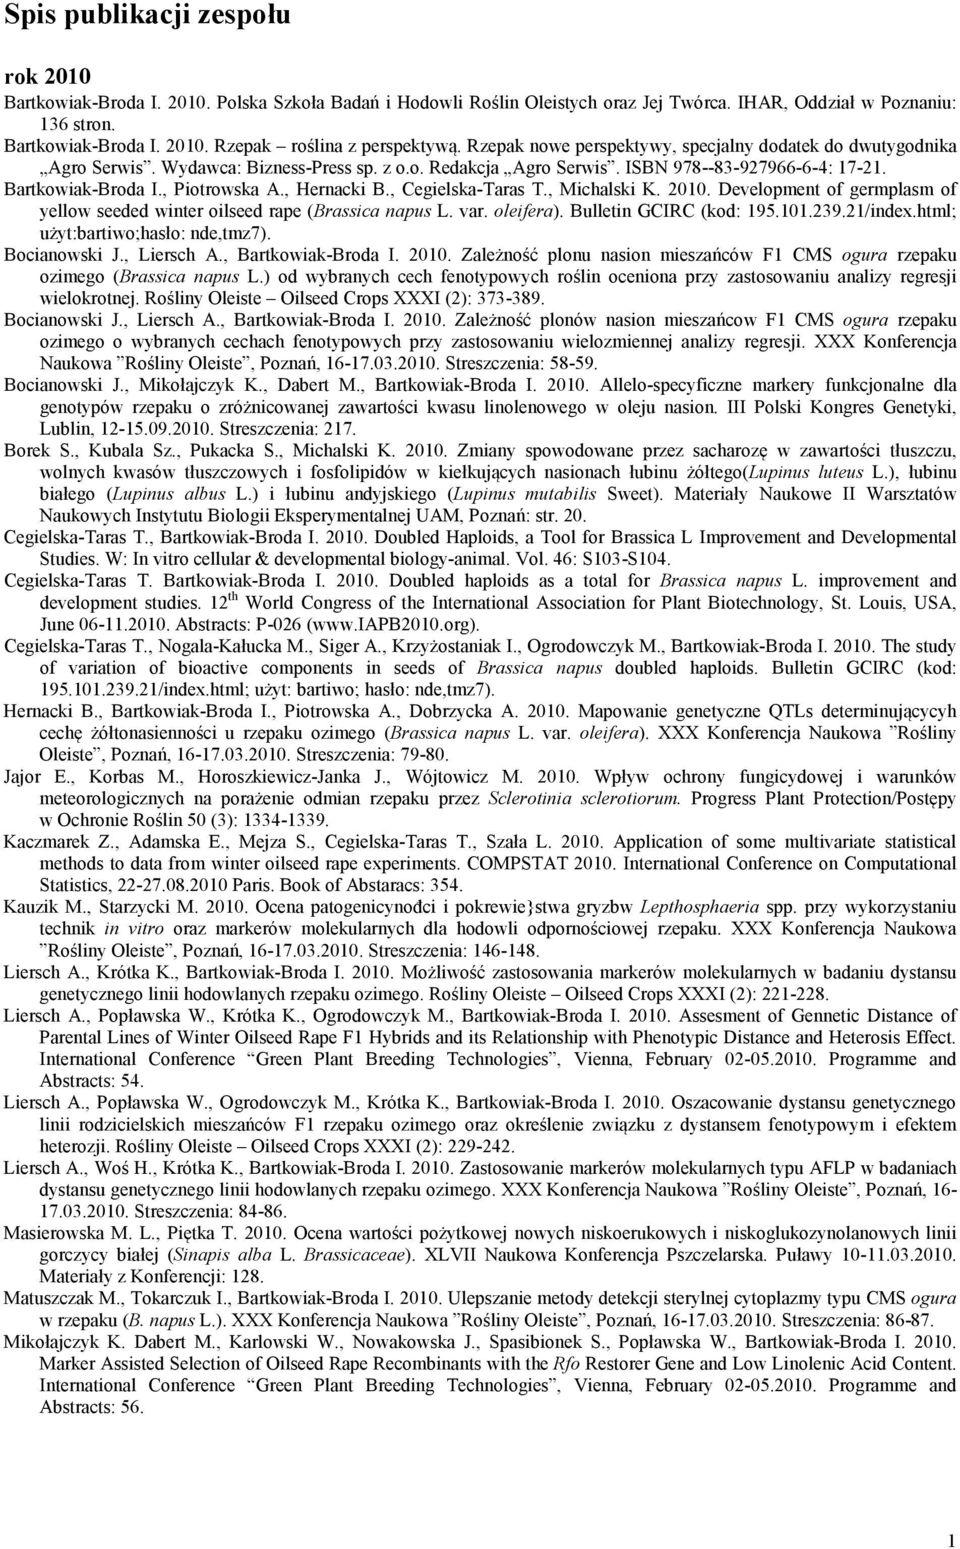 , Hernacki B., Cegielska-Taras T., Michalski K. 2010. Development of germplasm of yellow seeded winter oilseed rape (Brassica napus L. var. oleifera). Bulletin GCIRC (kod: 195.101.239.21/index.